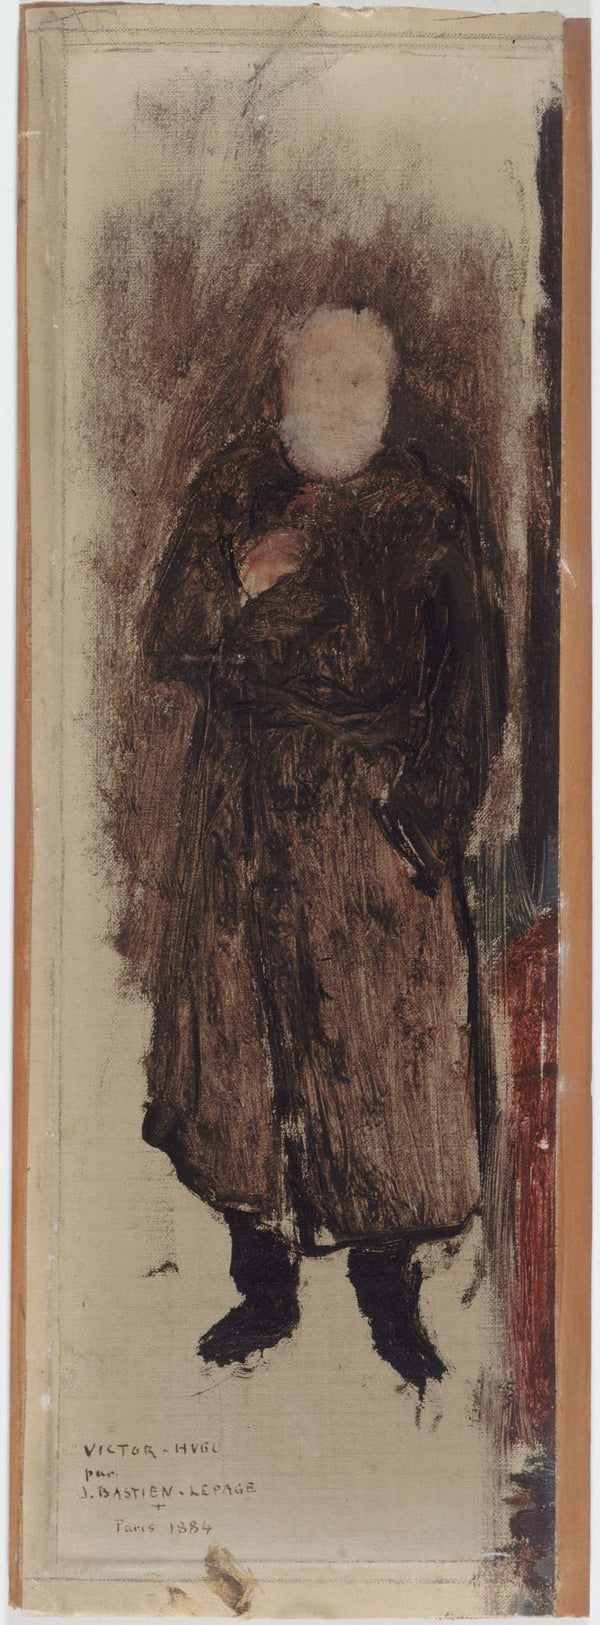 jules-bastien-lepage-1884-portrait-of-victor-hugo-art-print-fine-art-reproduction-wall-art